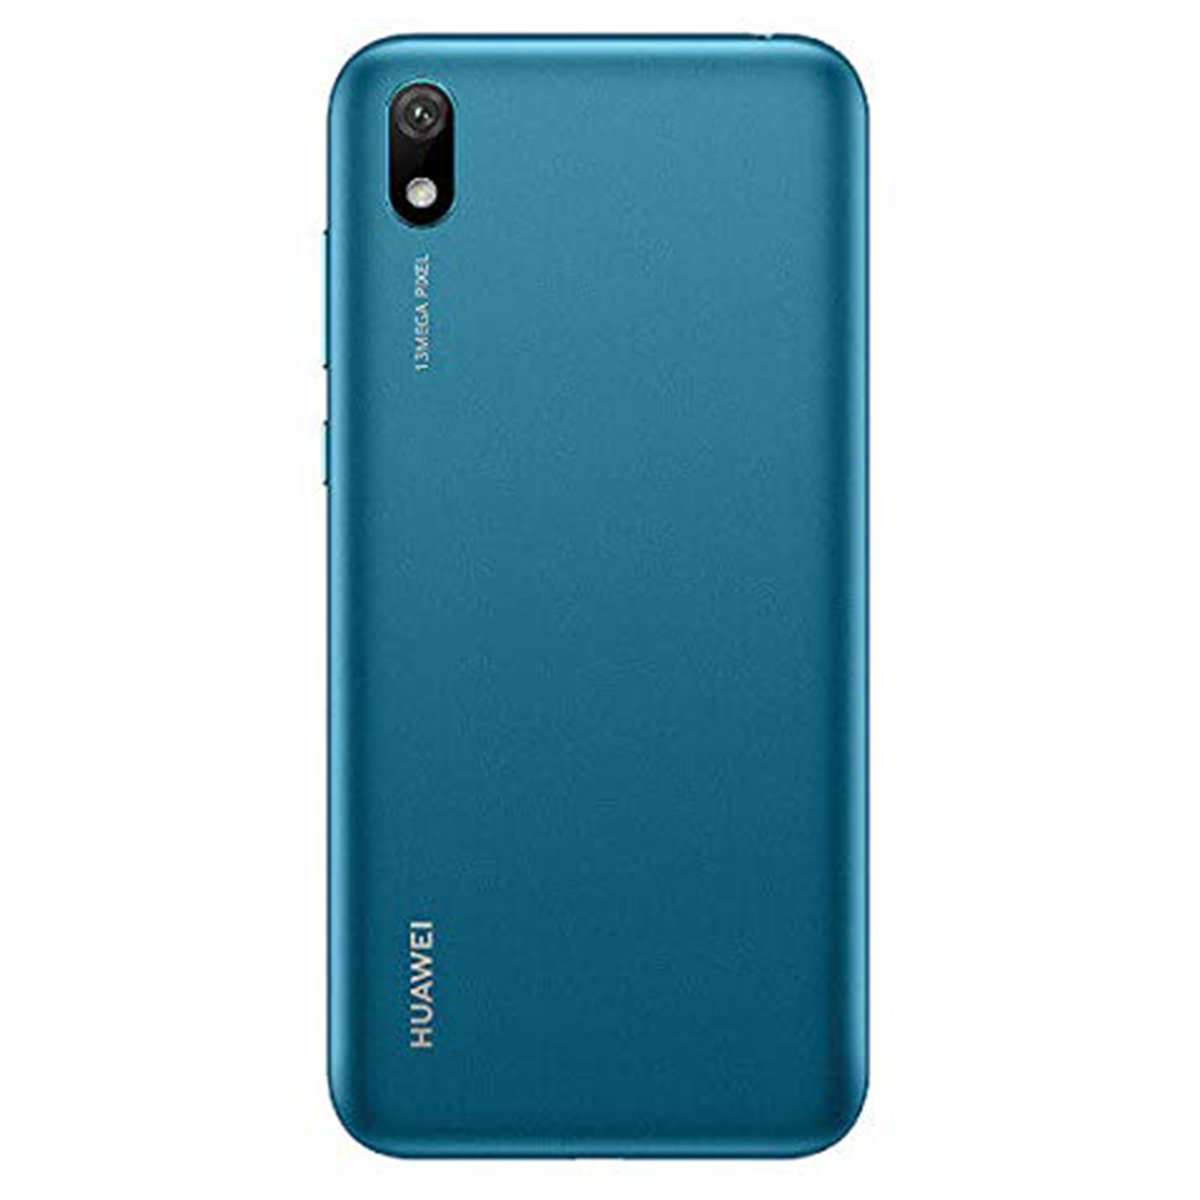 Huawei Y5-2019 32GB Sapphire Blue